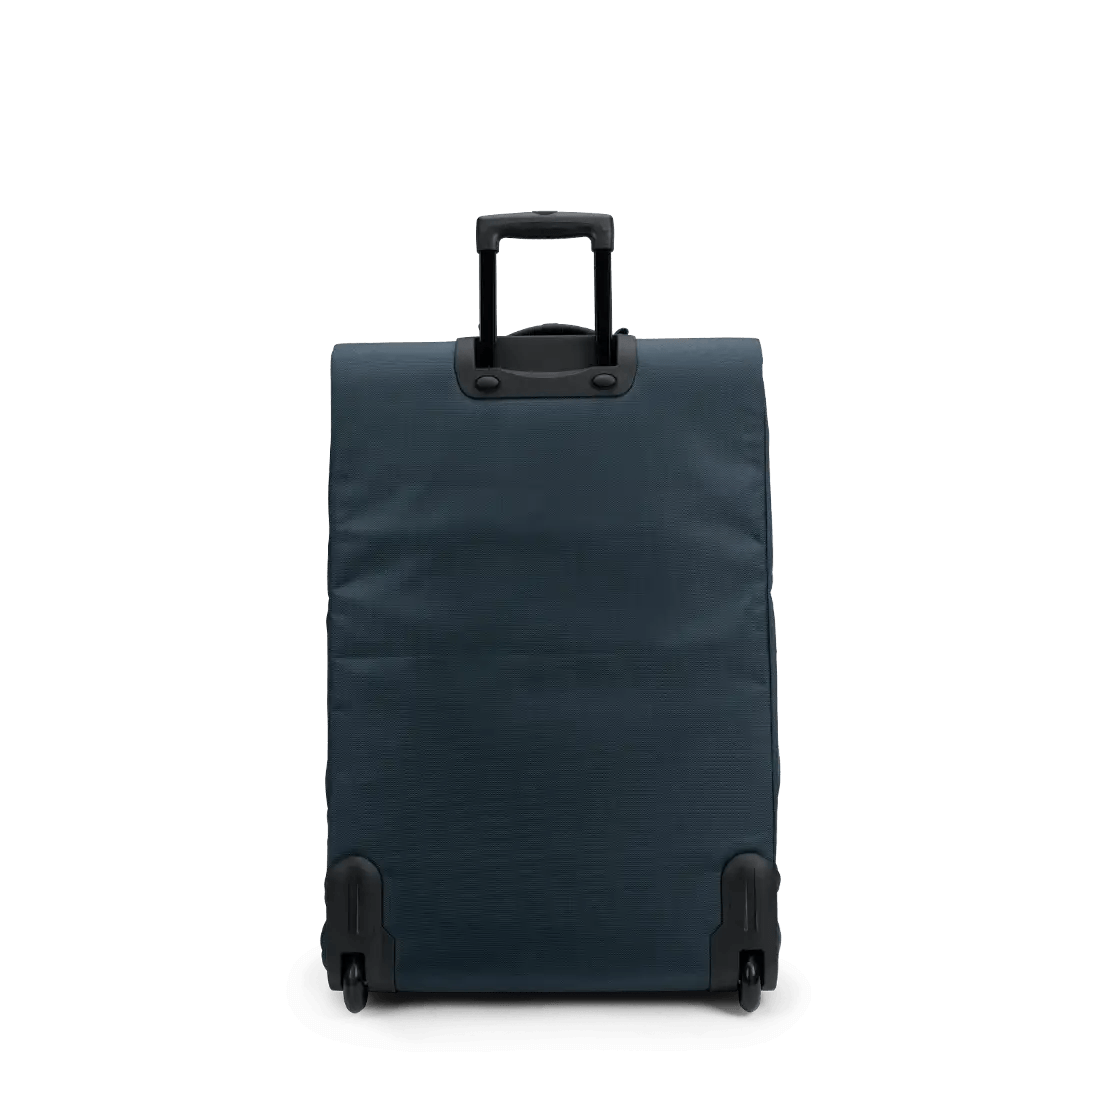 Nuna Wheeled Travel Bag, Indigo - ANB Baby -$100 - $300